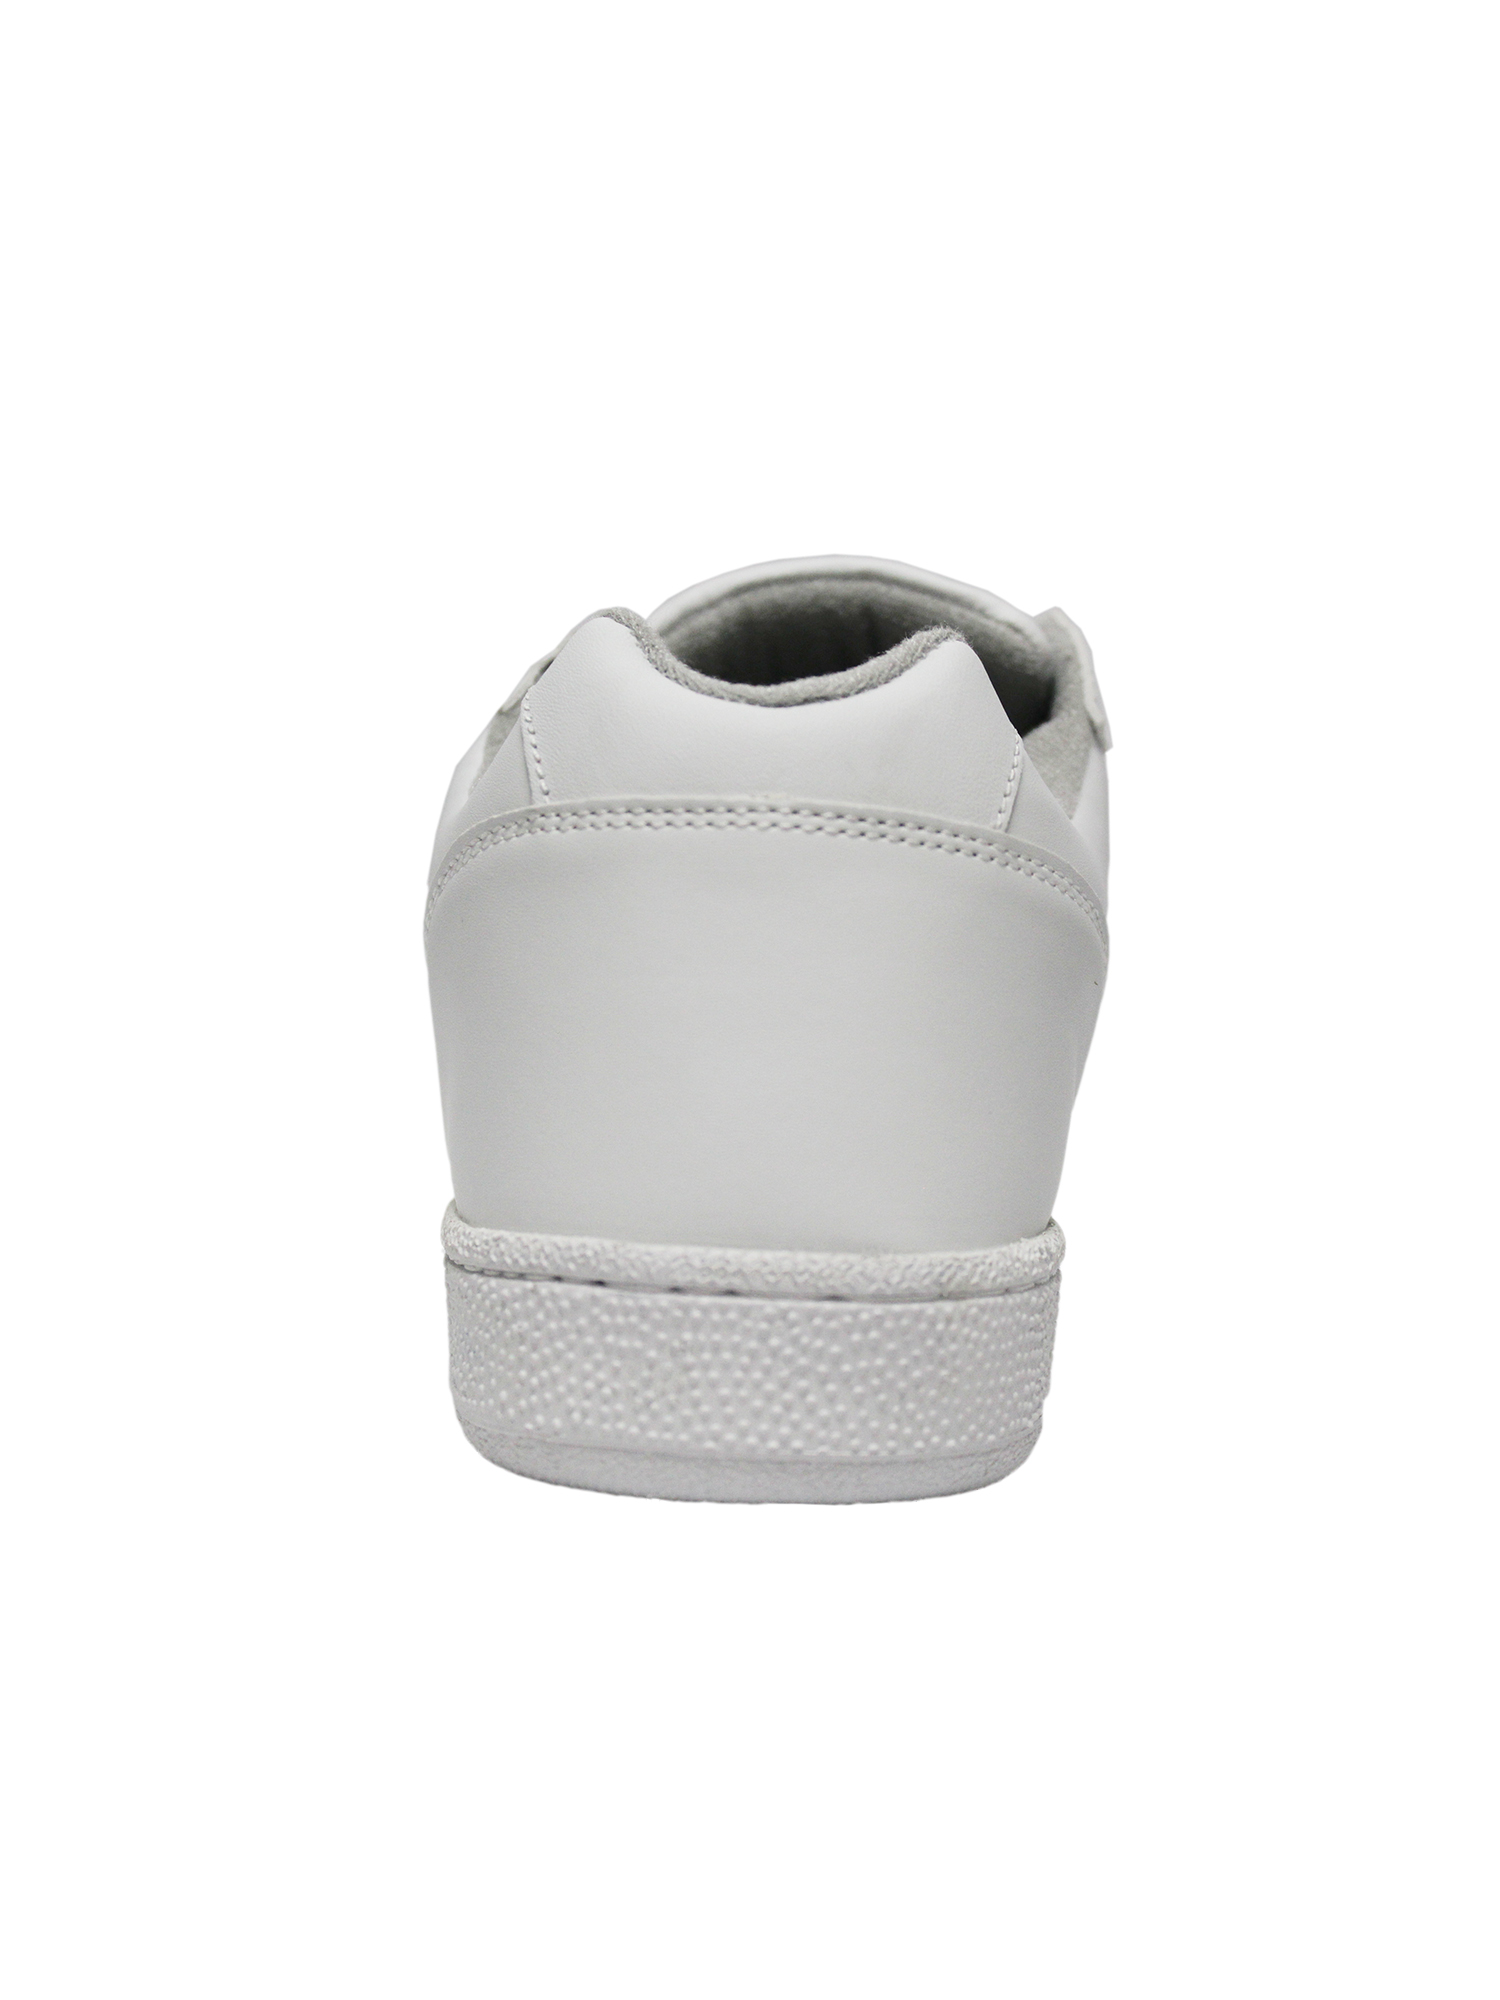 Tanleewa Men's Leather Strap Sneakers Lightweight Hook and Loop Walking Shoe Size 6 Adult Male - image 5 of 5